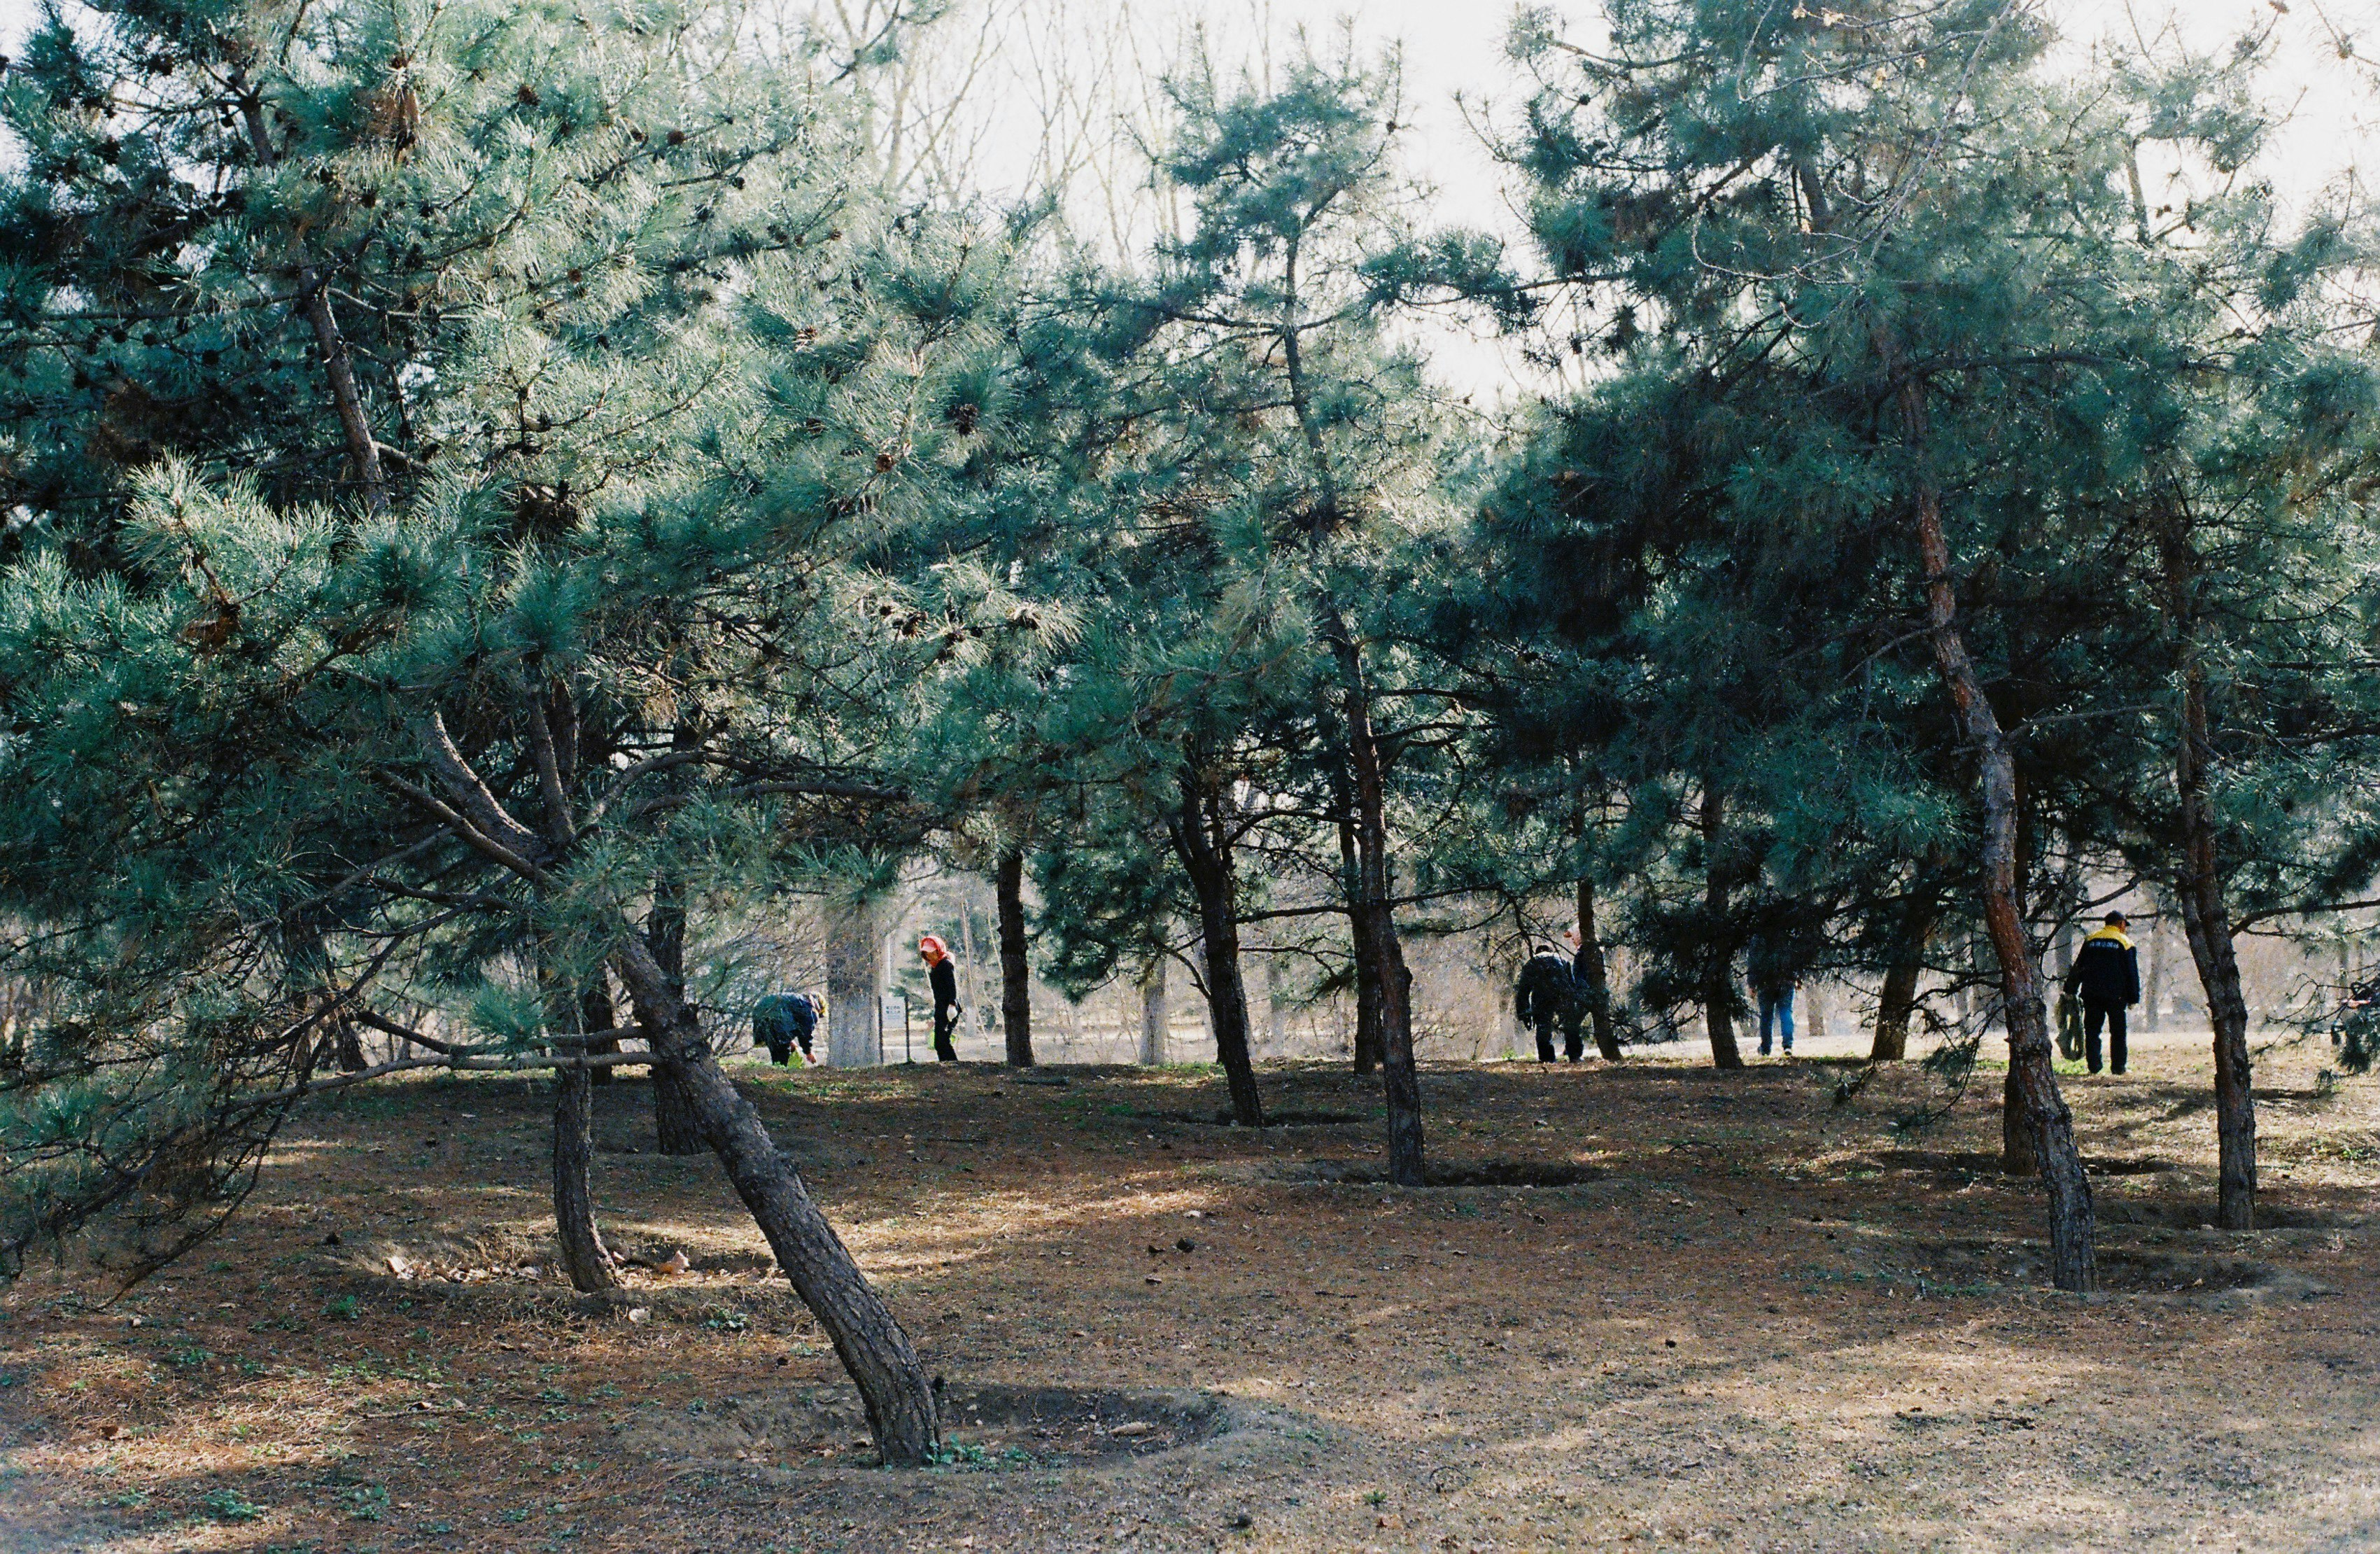 people walking on dirt road between trees during daytime